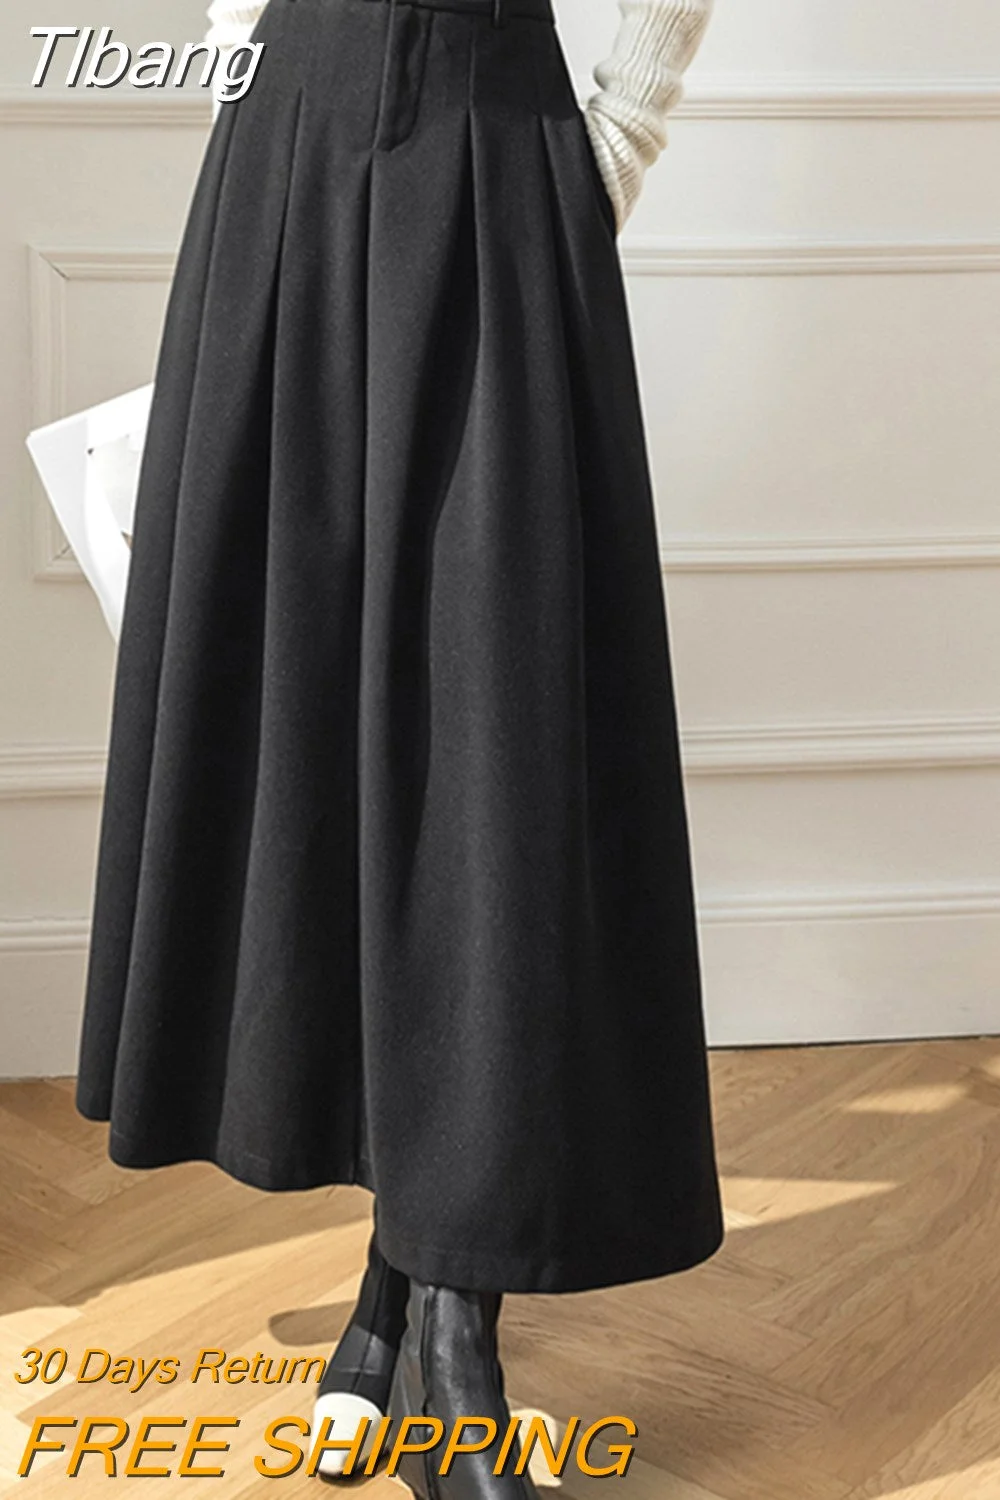 Tlbang Women Woolen Skirts For Female Pockets Office Ladies Casual Loose A-Line High Waist Midi Skirt Autumn Winter Black Skir